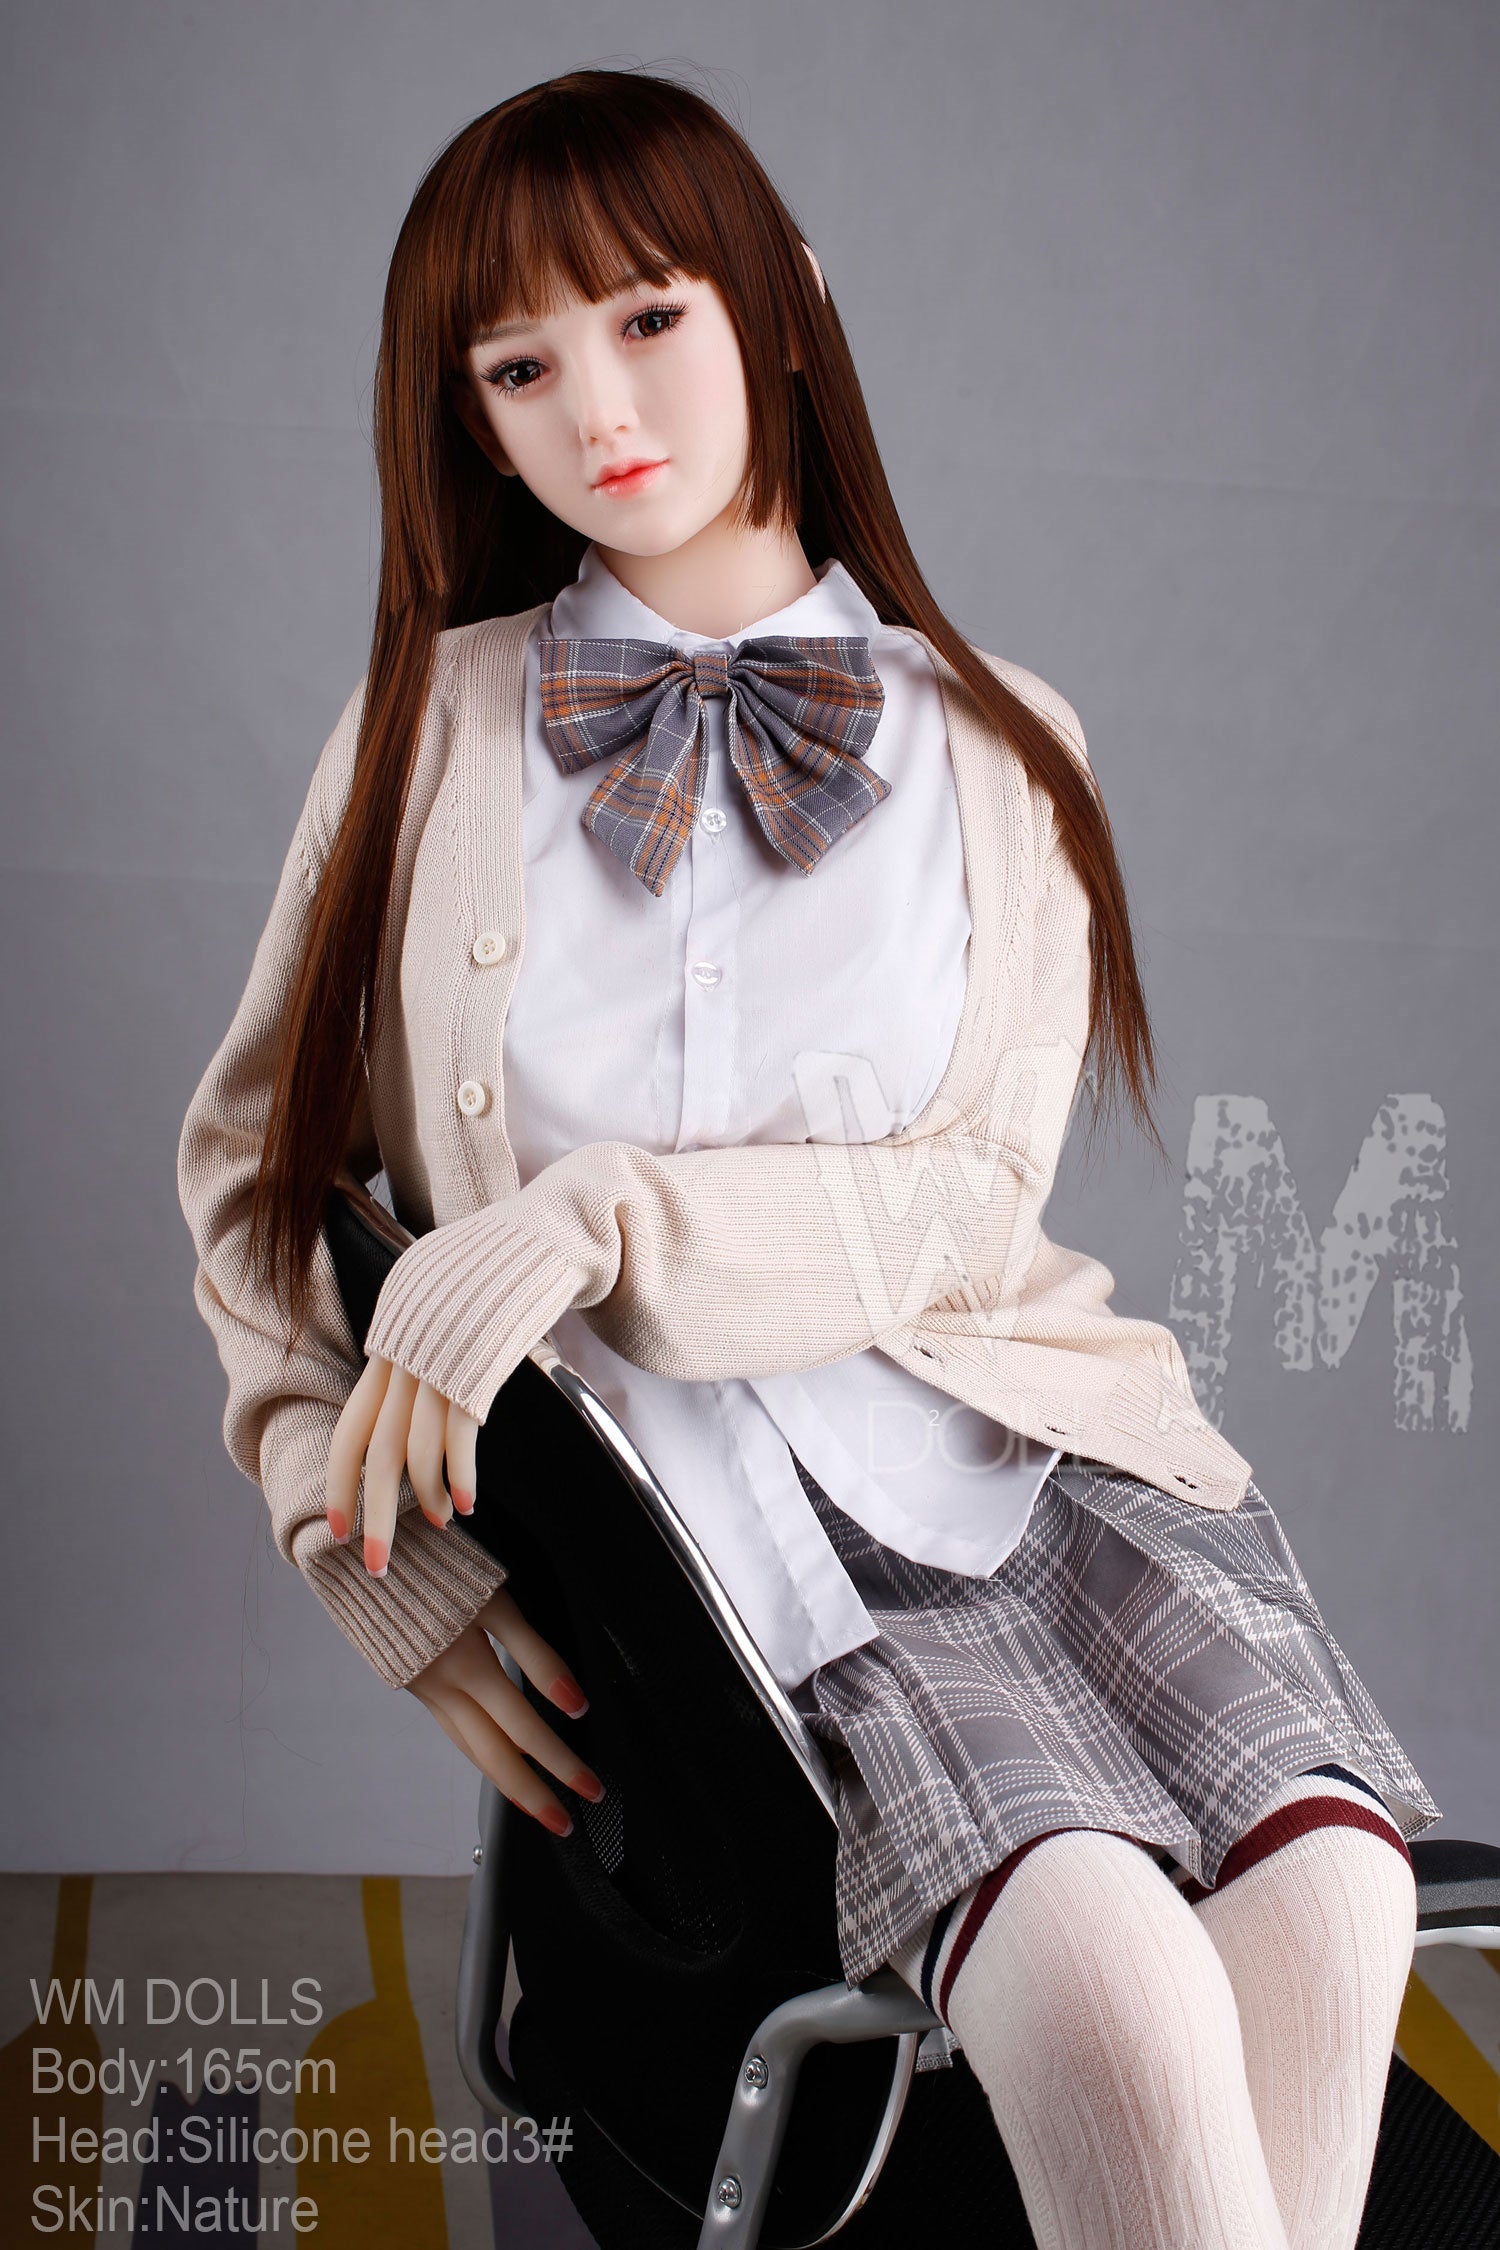 165cm / 5ft5 C-cup JK Uniform Teen TPE Sex Doll - Yoko